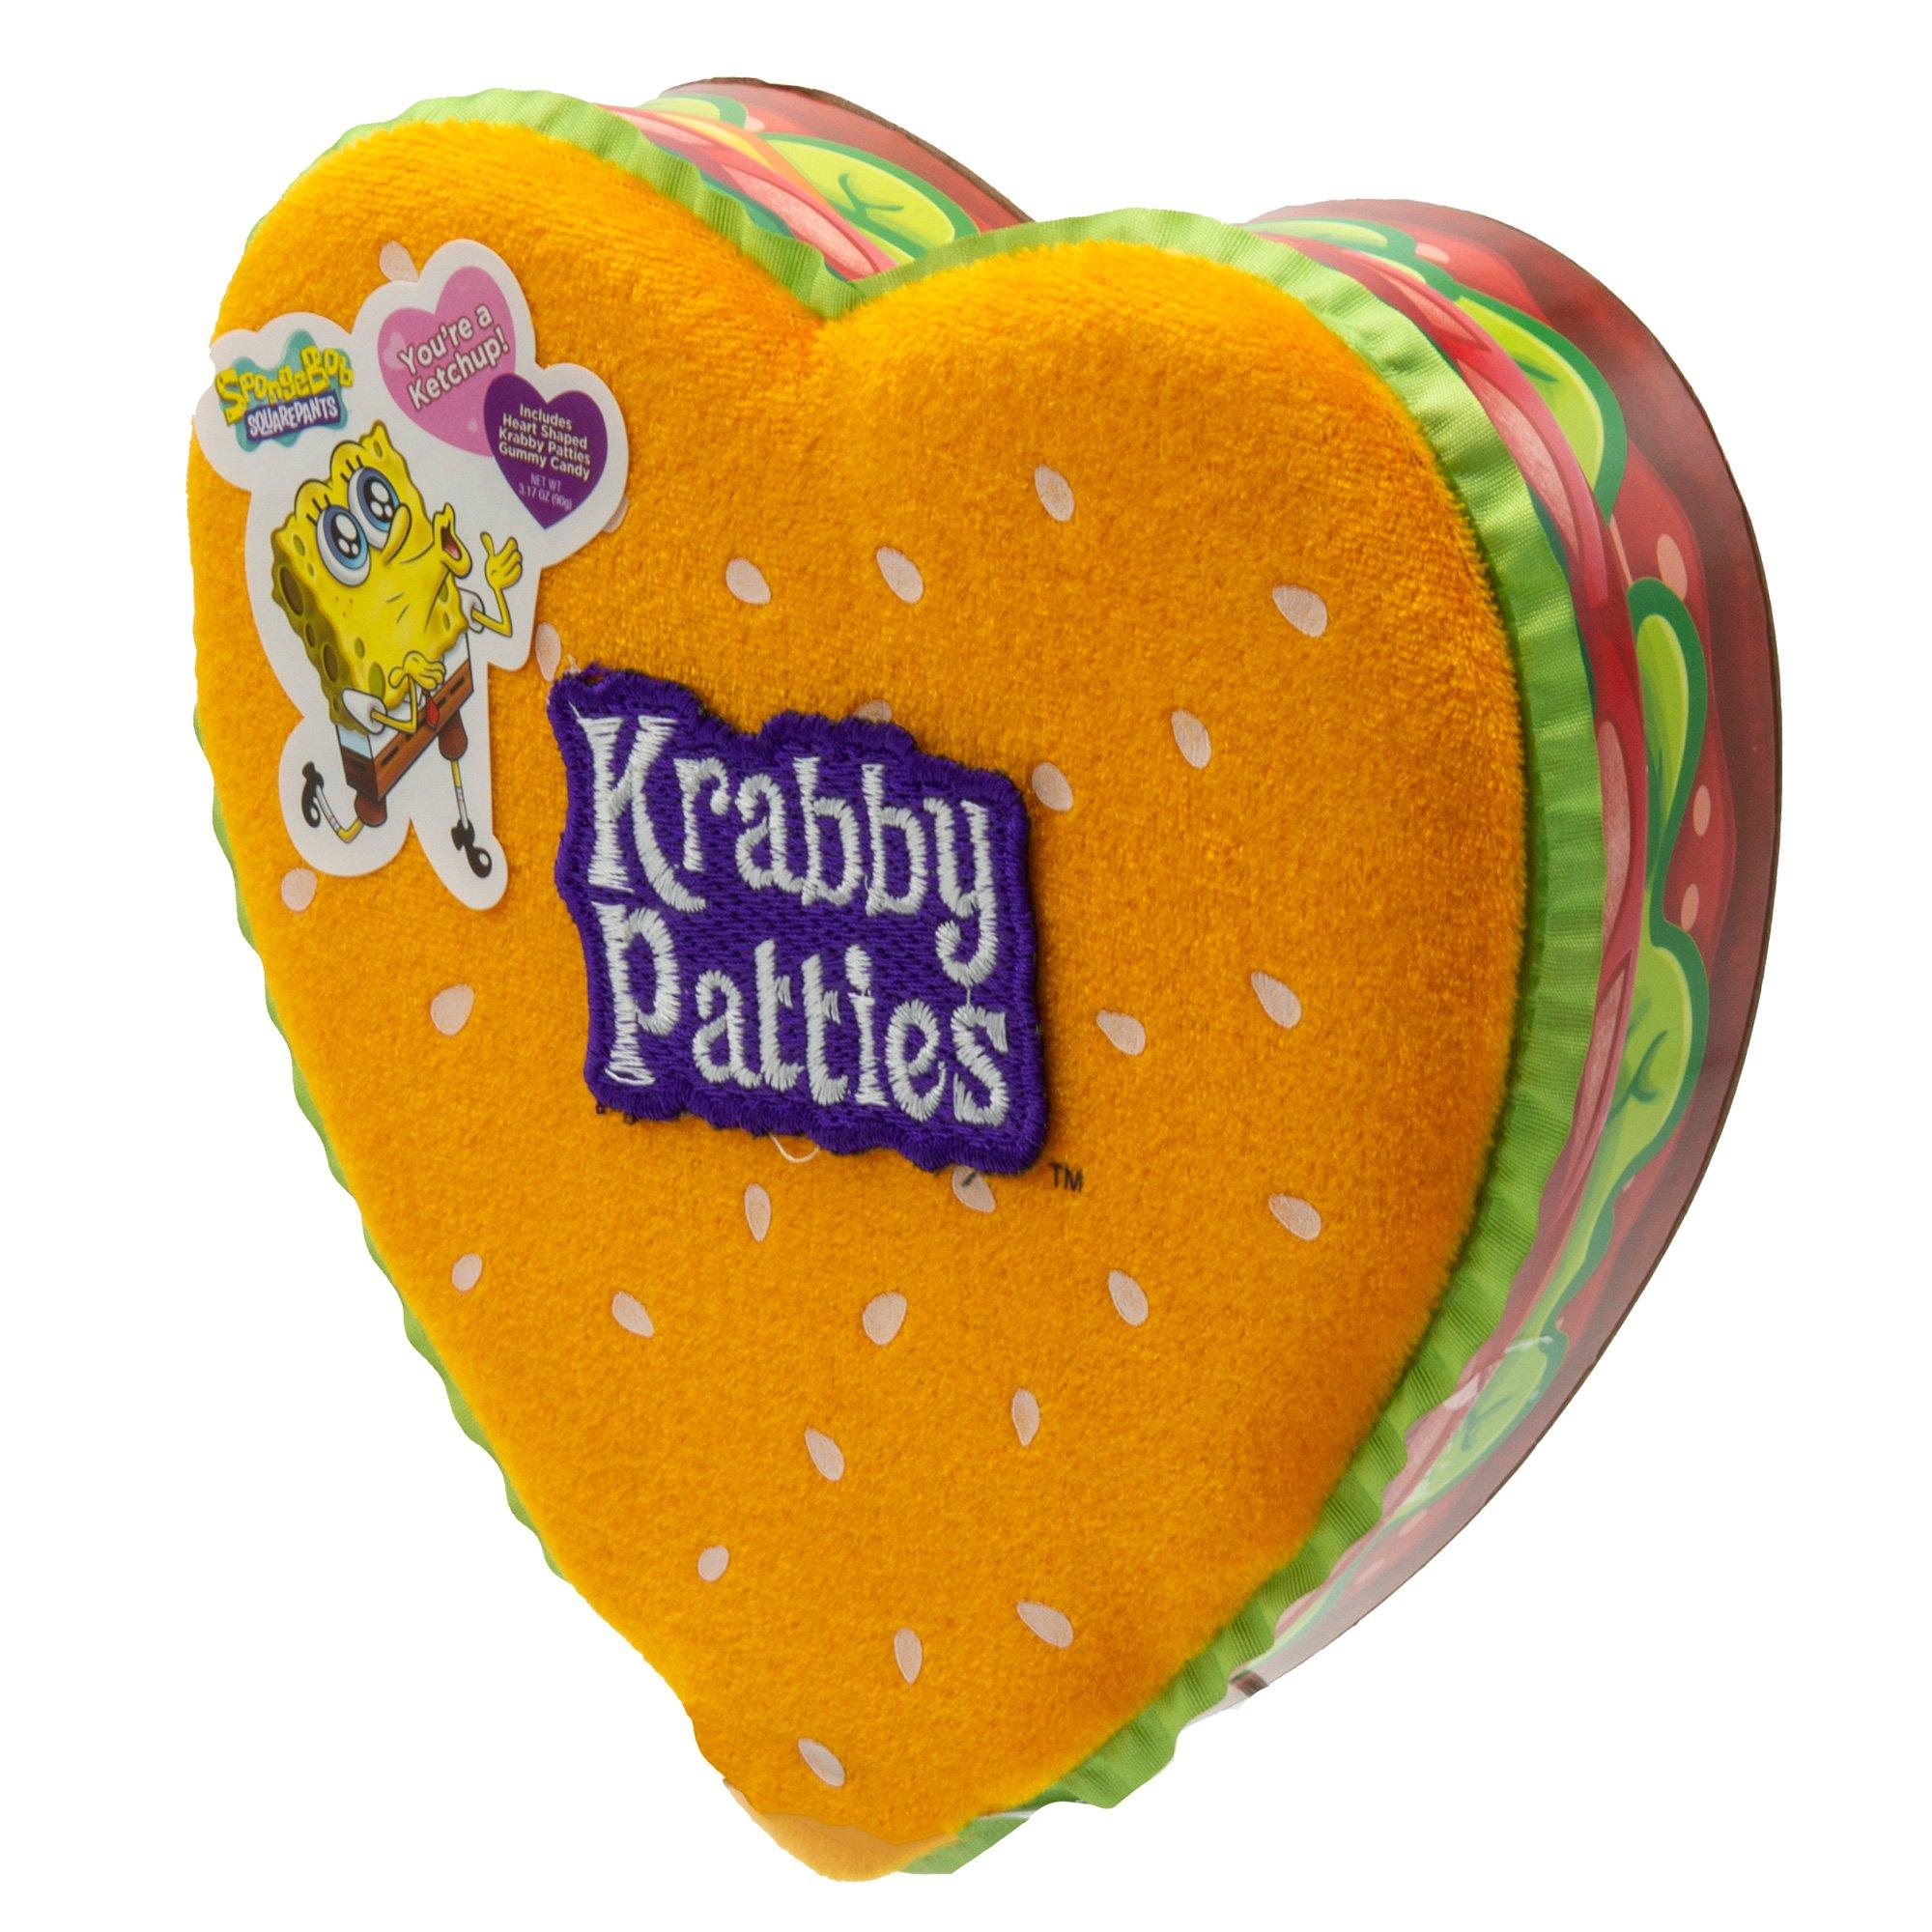 Heart-Shaped Krabby Patties Gummy Candy in Plush Heart Box, 3.17oz - SpongeBob SquarePants